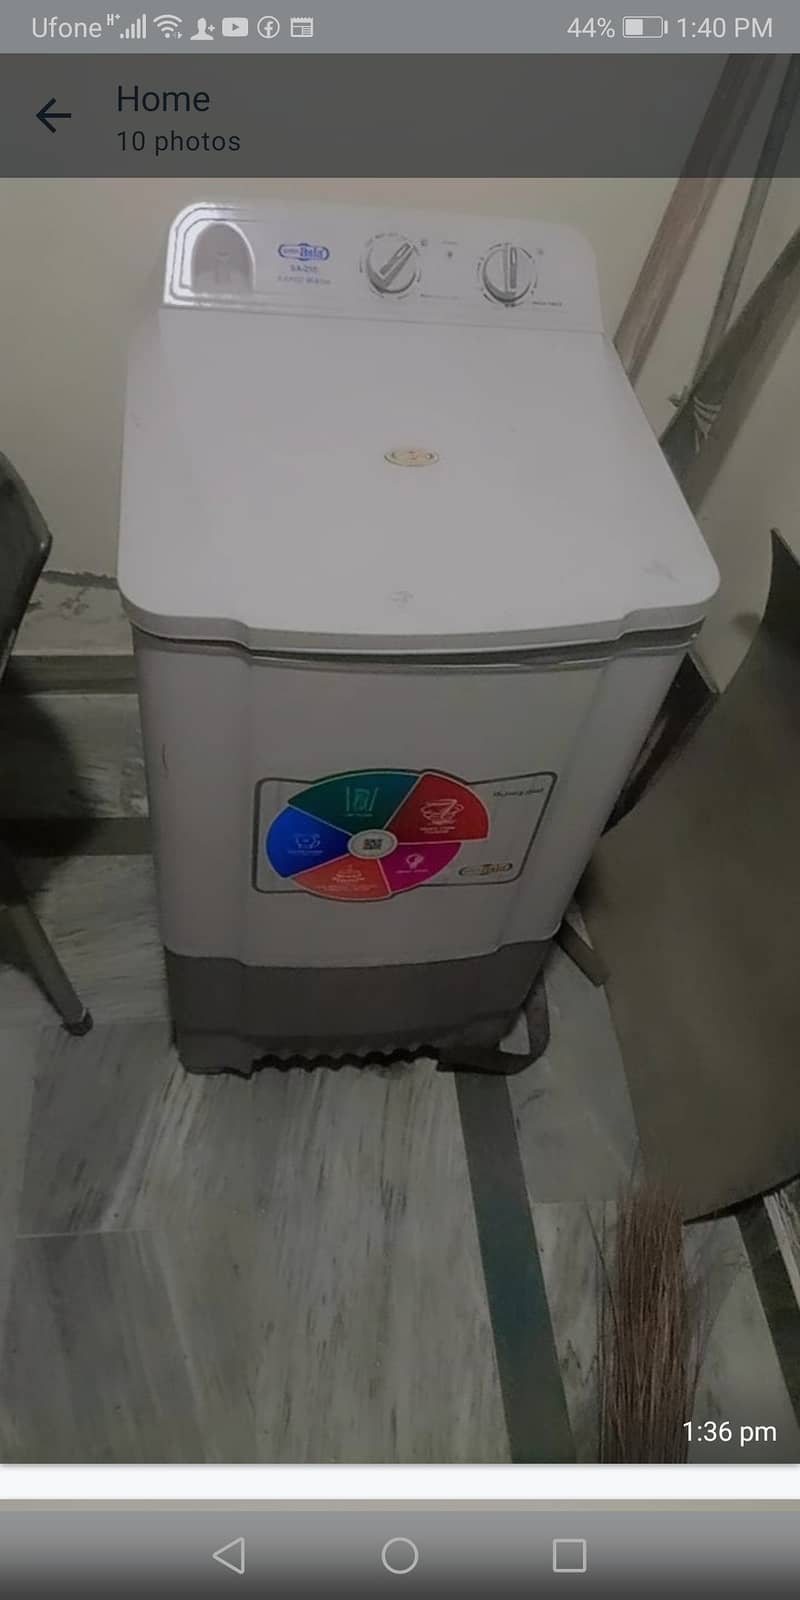 Super Asia Washing Machine 0